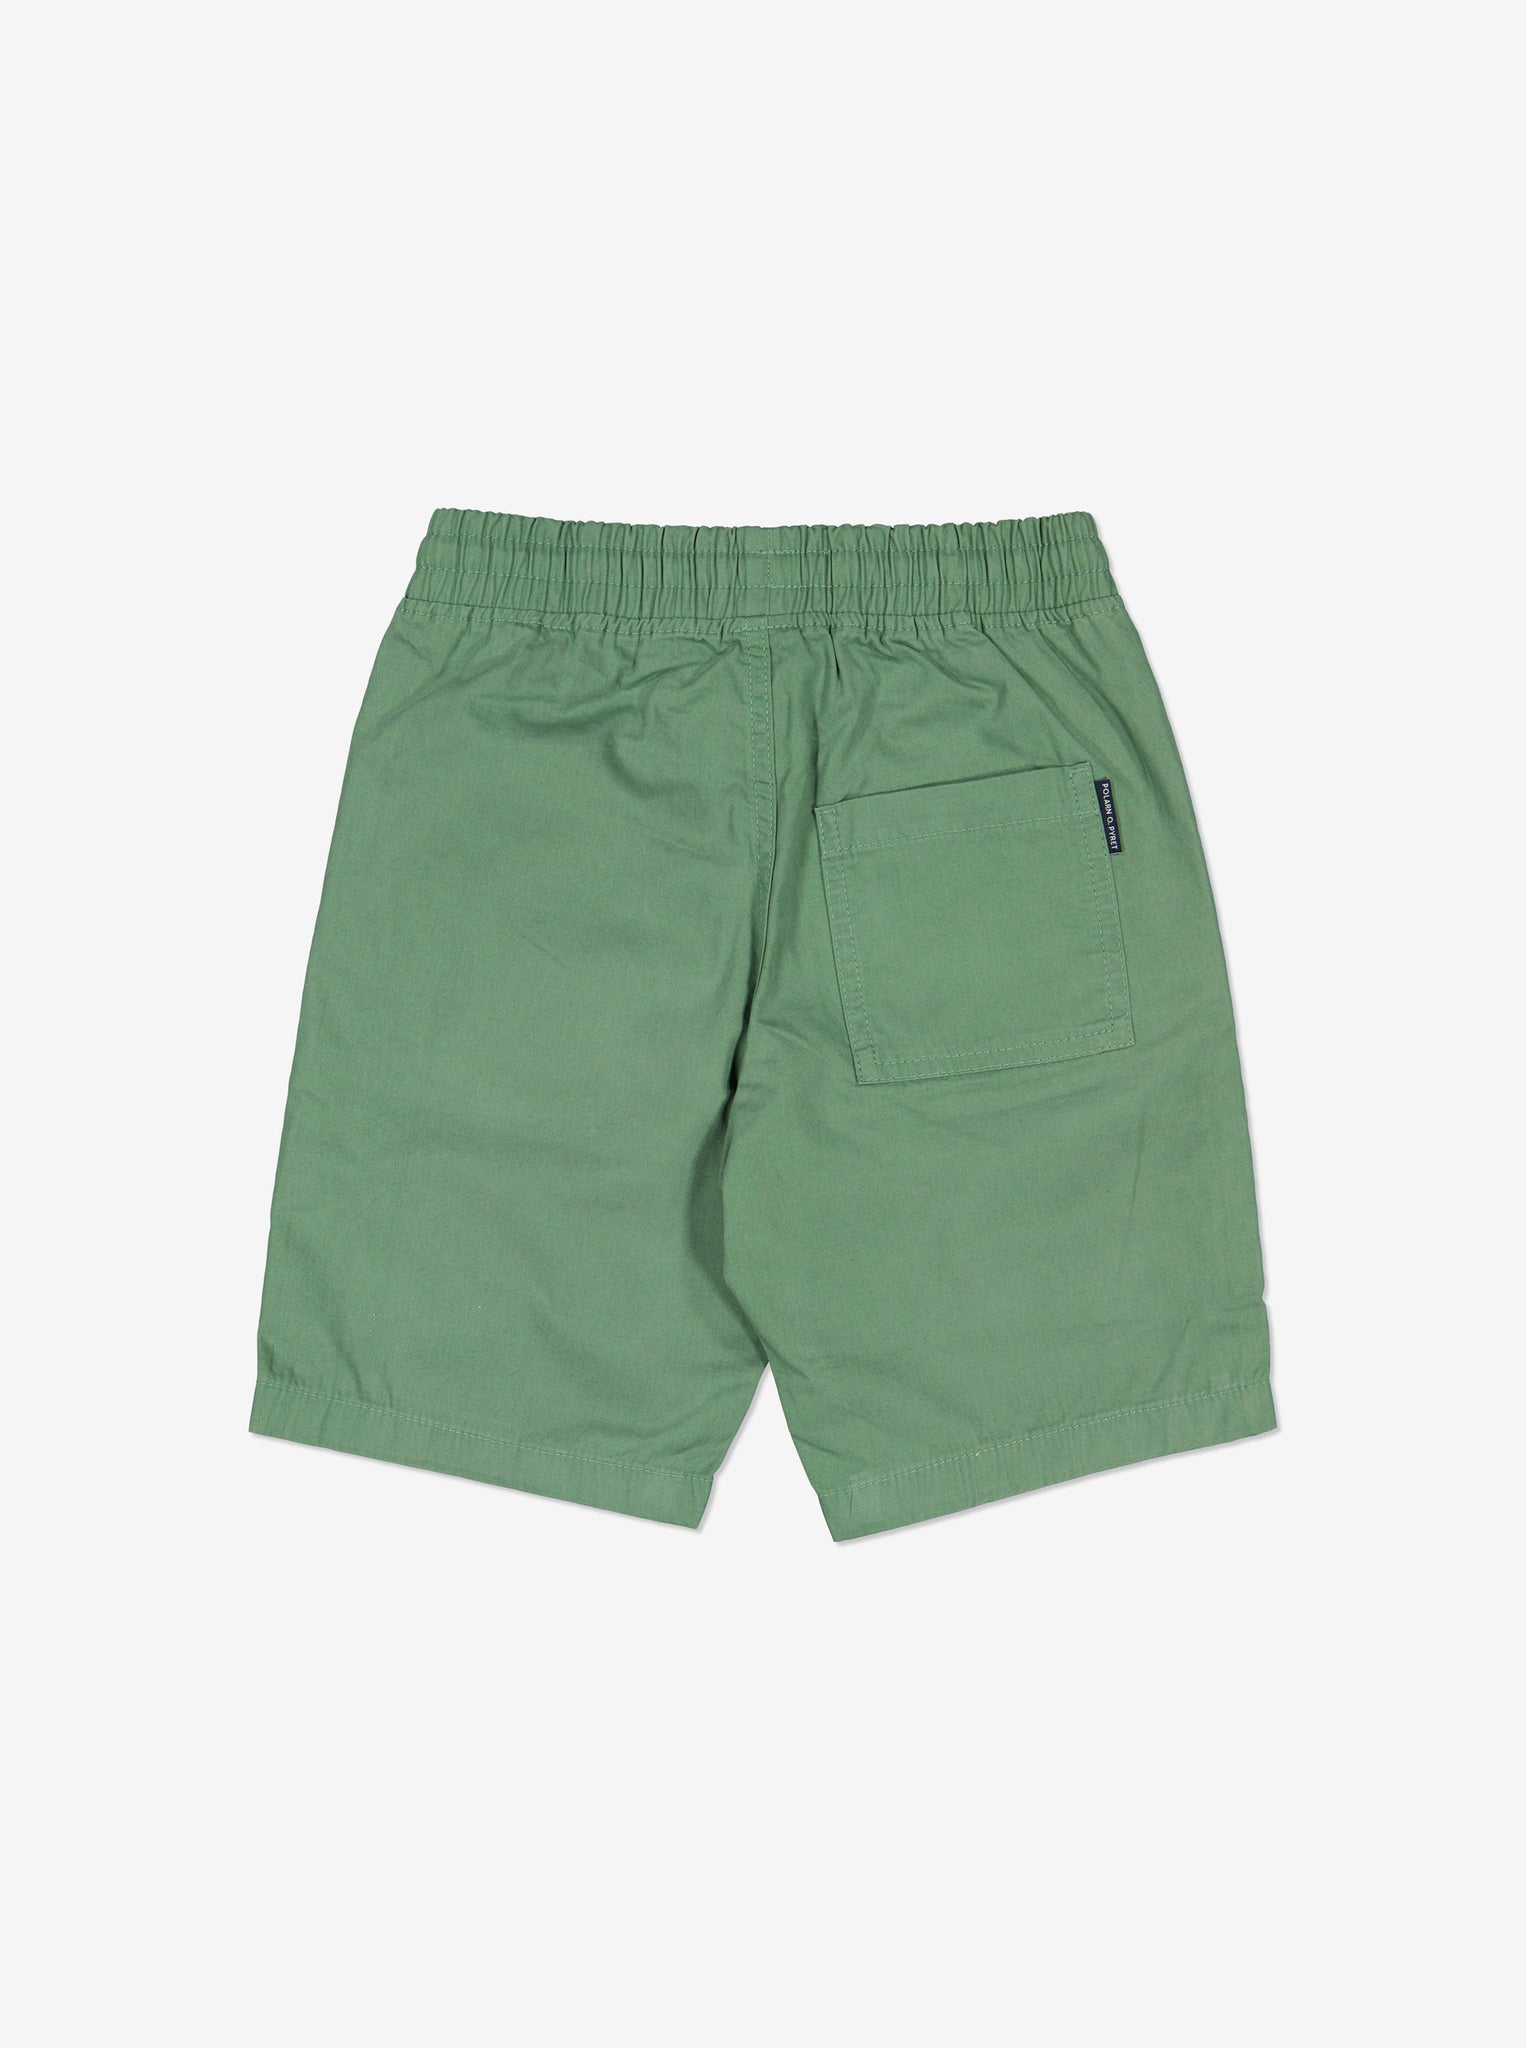 Green Organic Cotton Kids Chino Shorts from Polarn O. Pyret Kidswear. Made from 100% GOTS Organic Cotton.